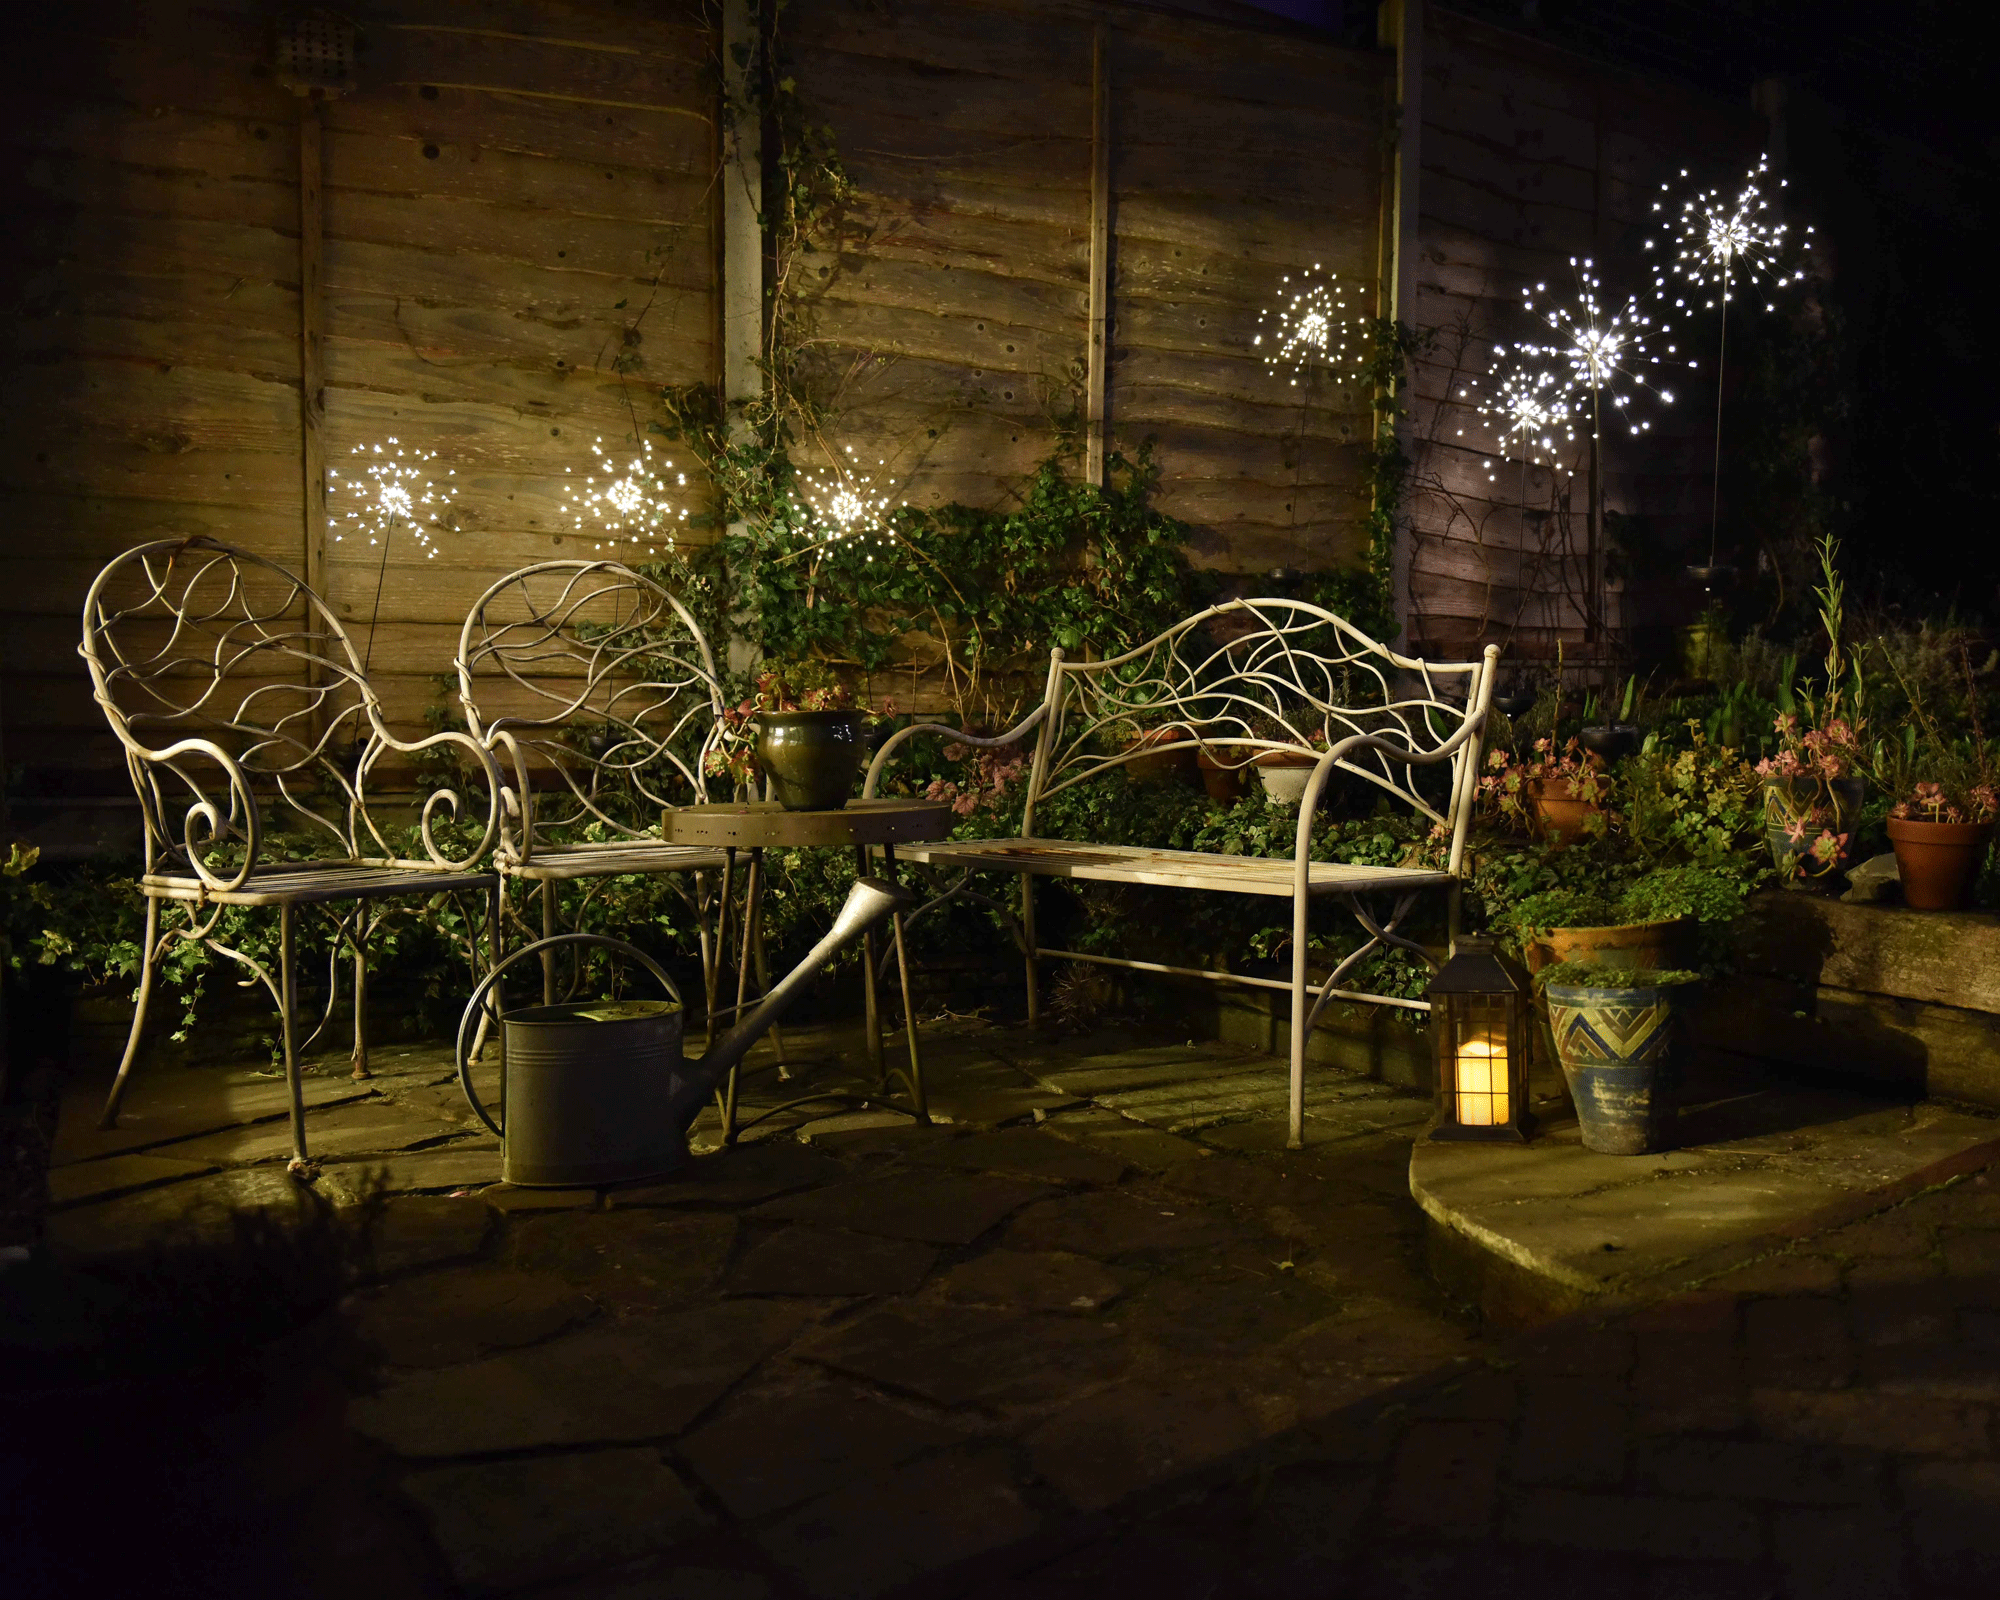 solar powered dandelion lights in garden with outdoor furniture